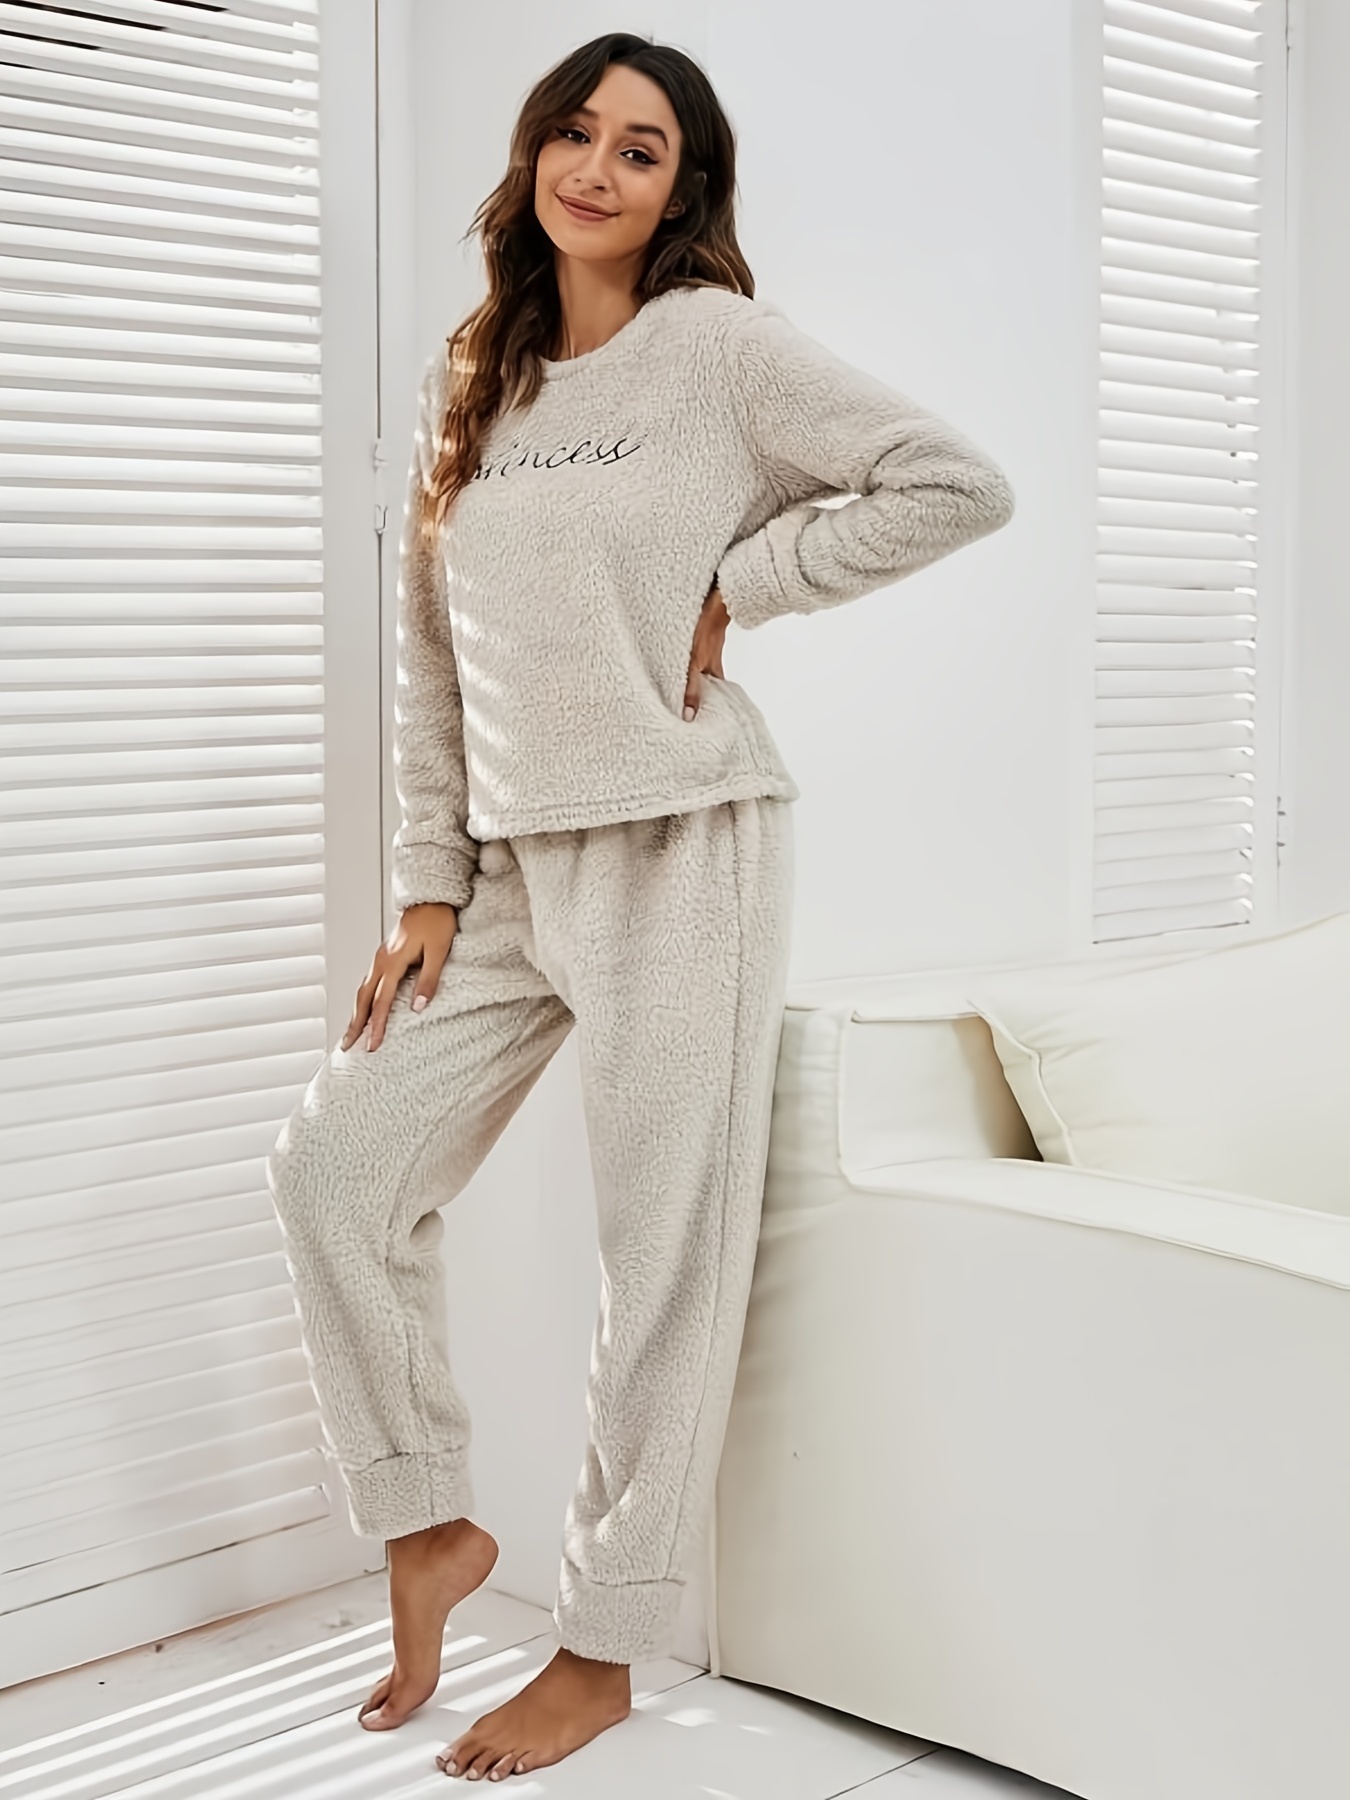 Women's Pajamas Set Cotton Gray Sleepwear Long Sleeve Long Pants Autumn  Winter Loungewear Fashion Home Clothing Sleepwear 2Piece